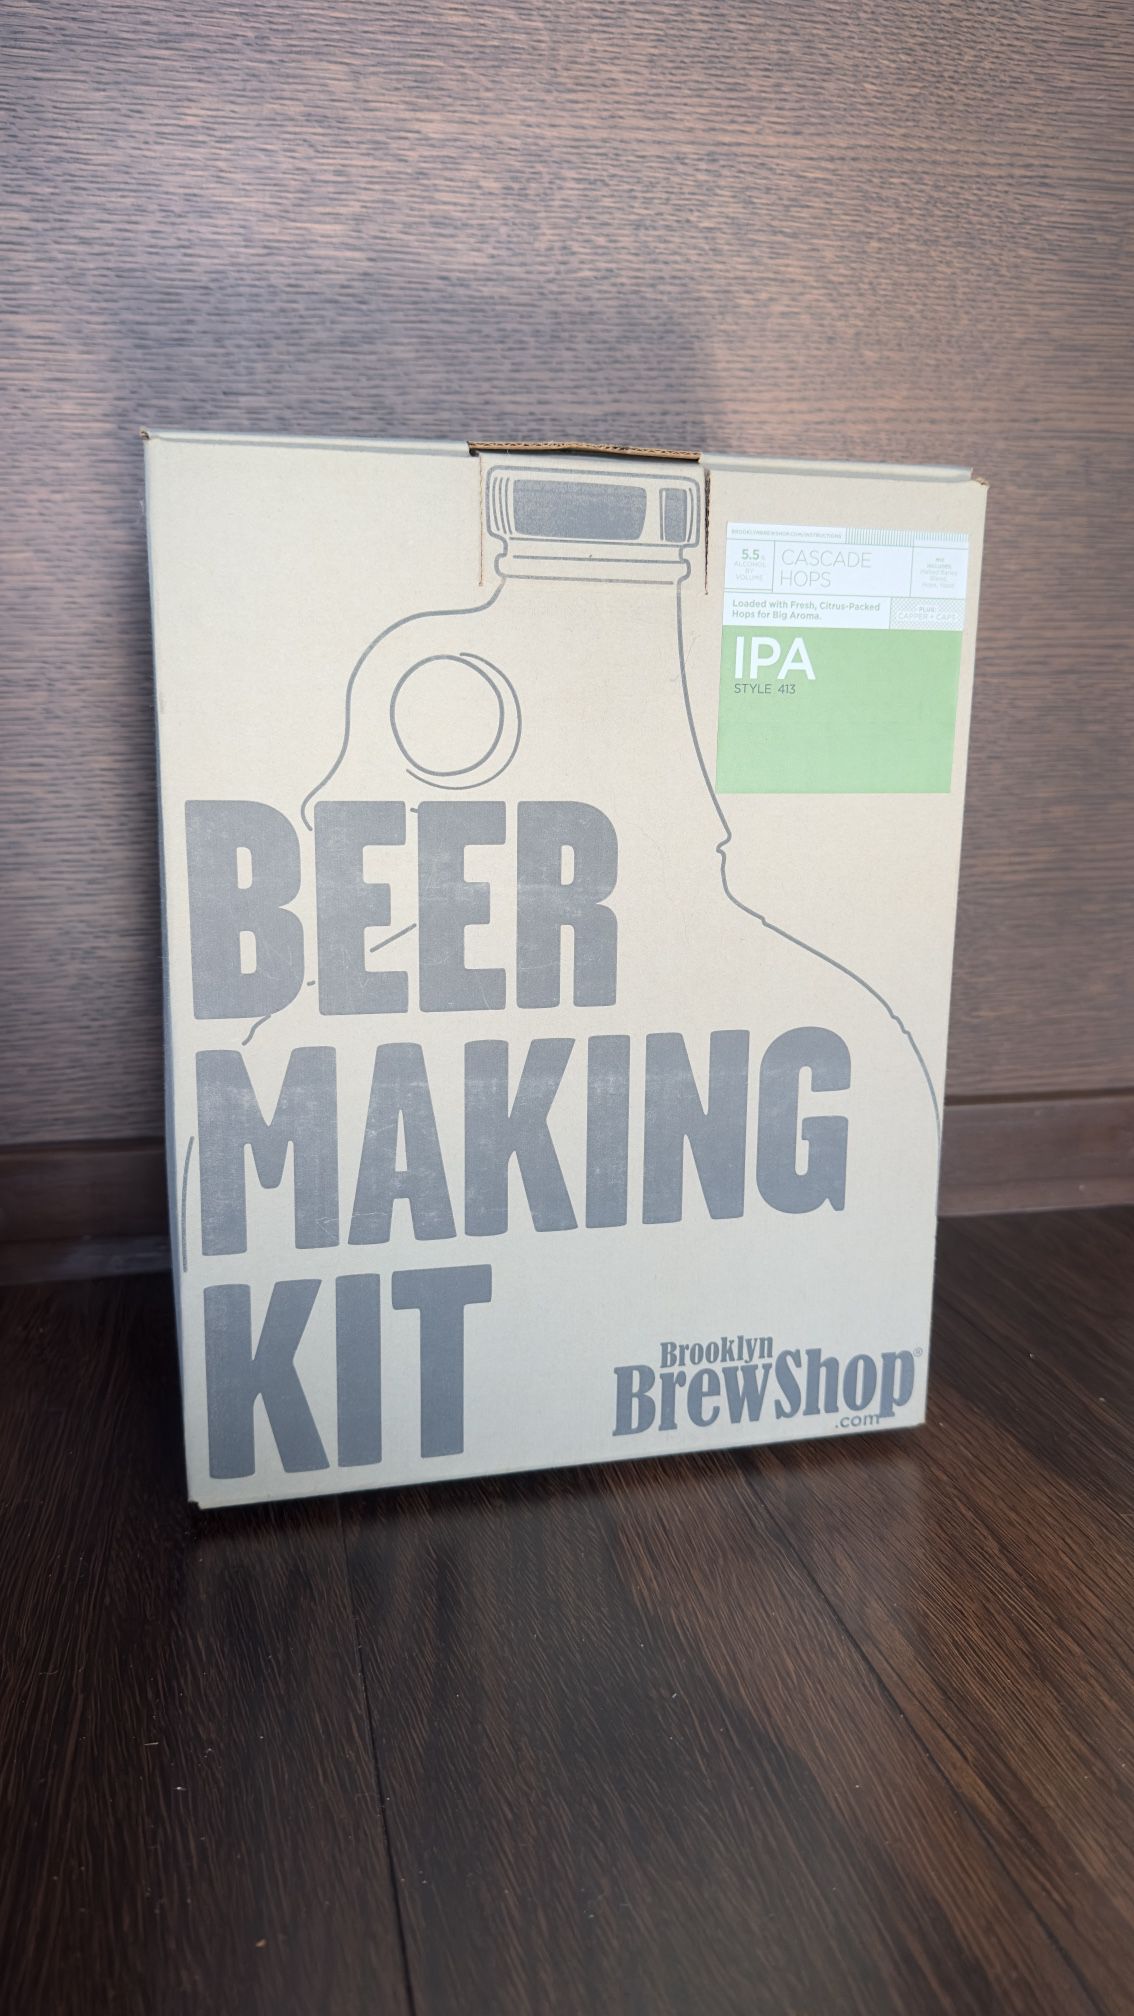 Brooklyn Brew shop "Beer making kit IPA